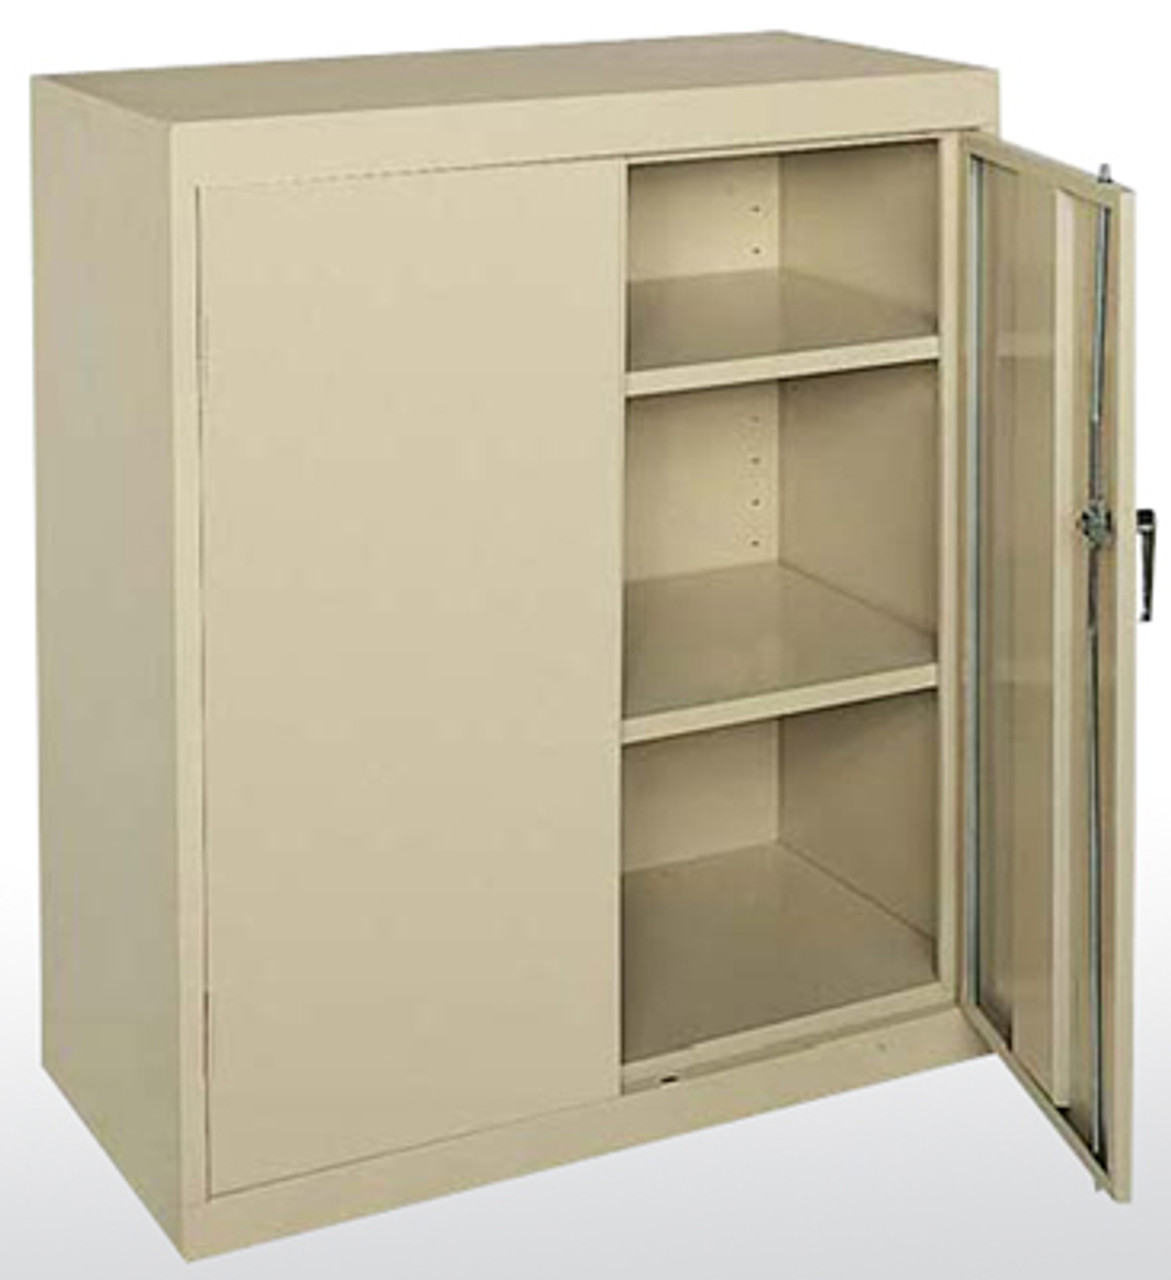 Tennsco 36 W x 24 D x 42 H Standard Counter Height Storage